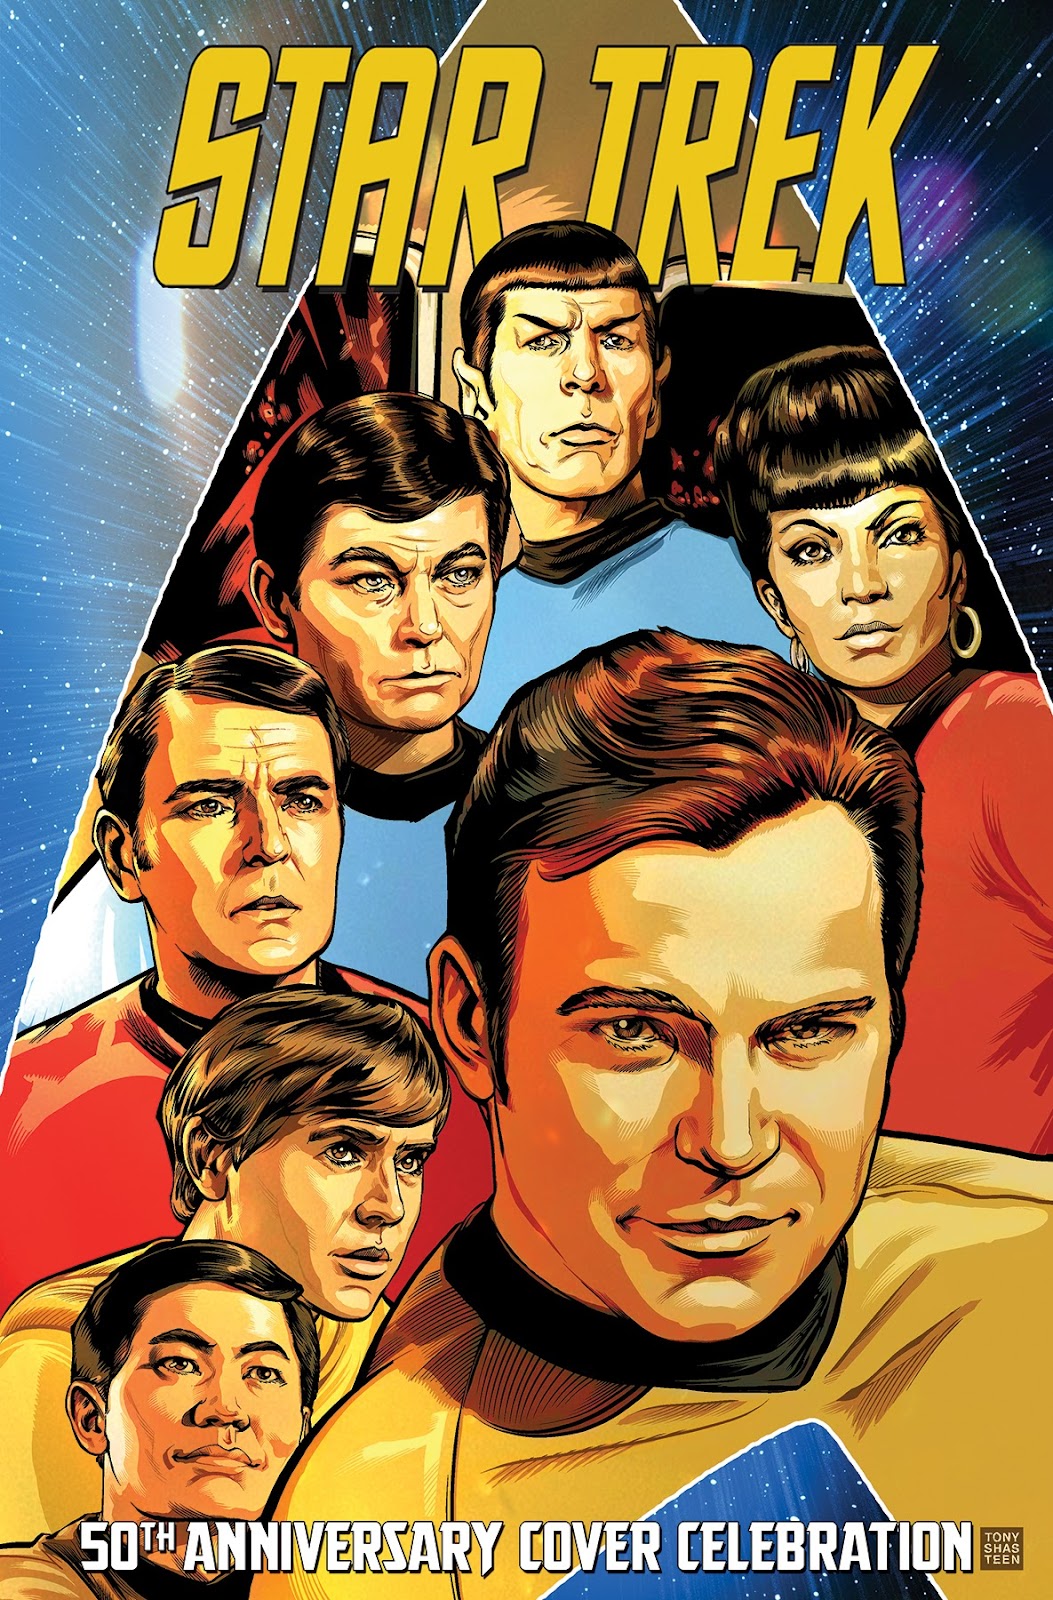 The Trek Collective IDW's Star Trek comics for August